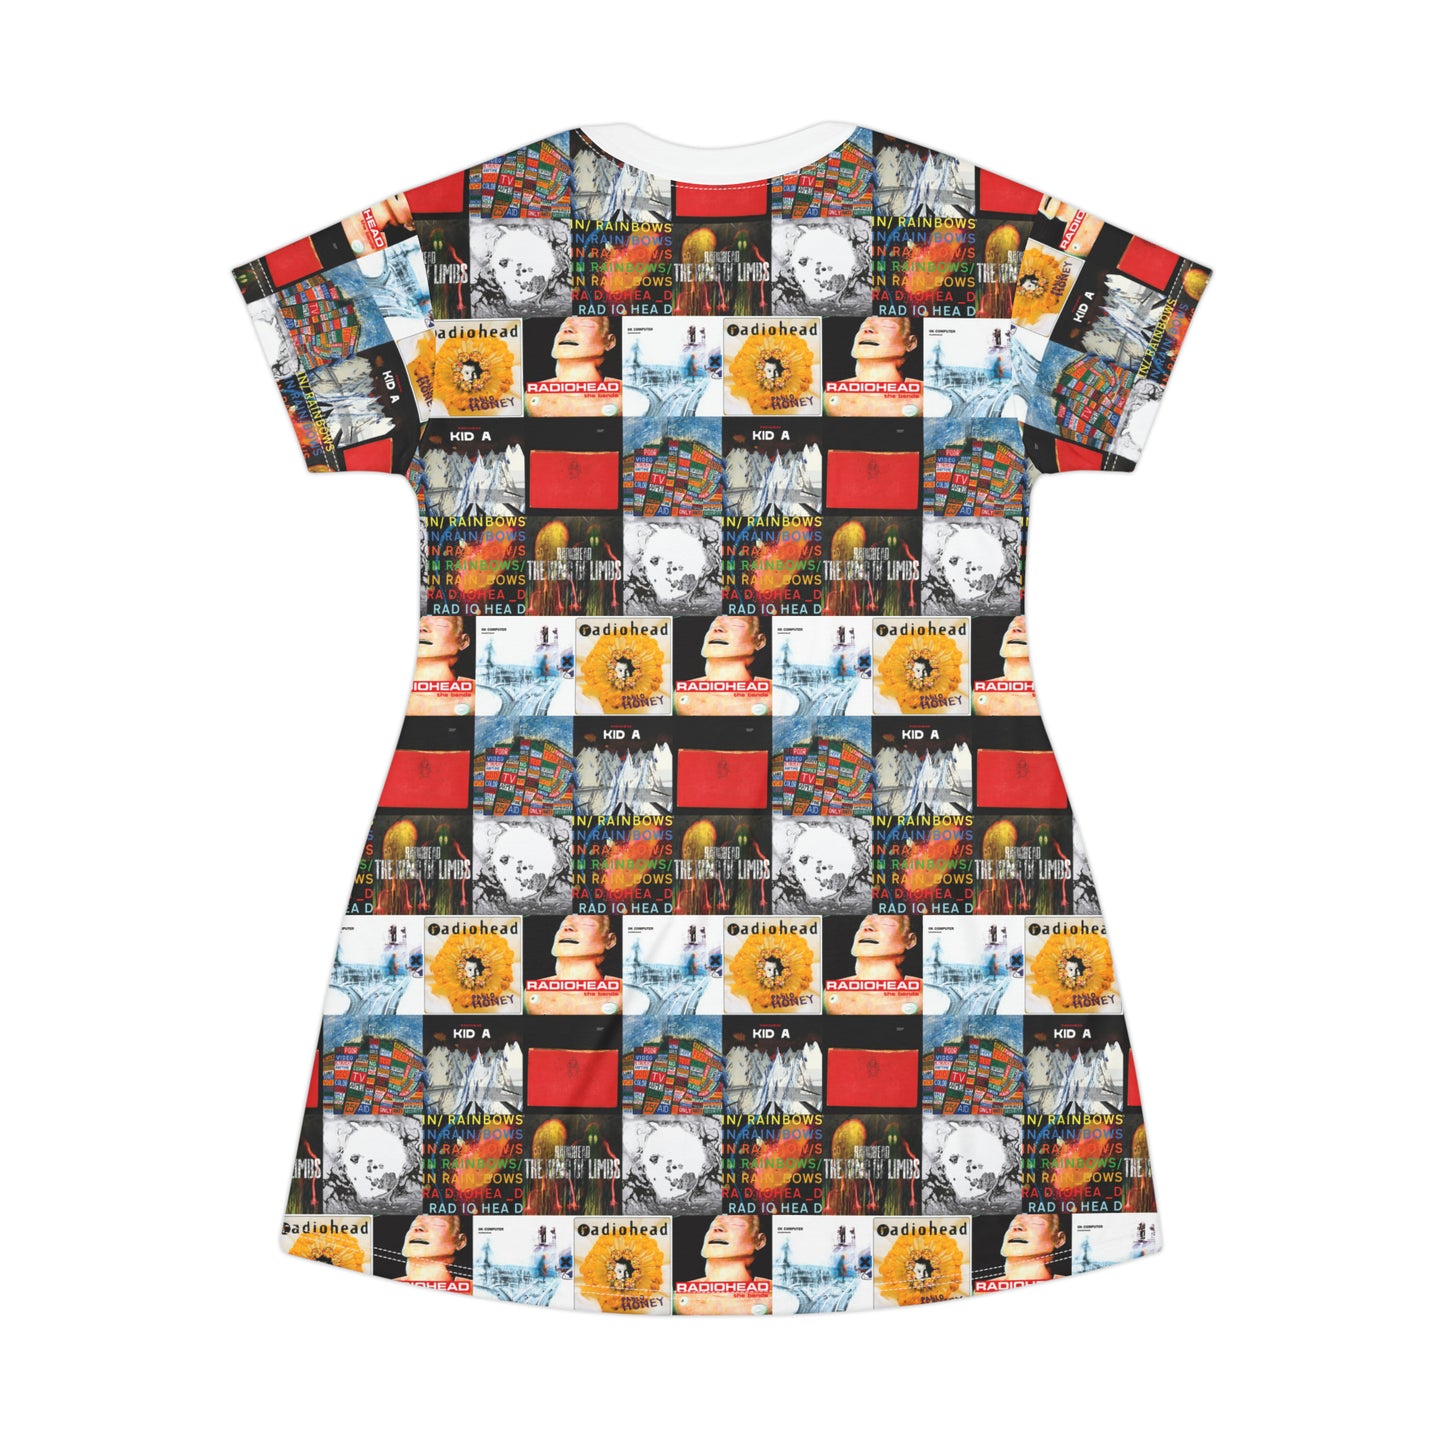 Radiohead Album Cover Collage T-Shirt Dress